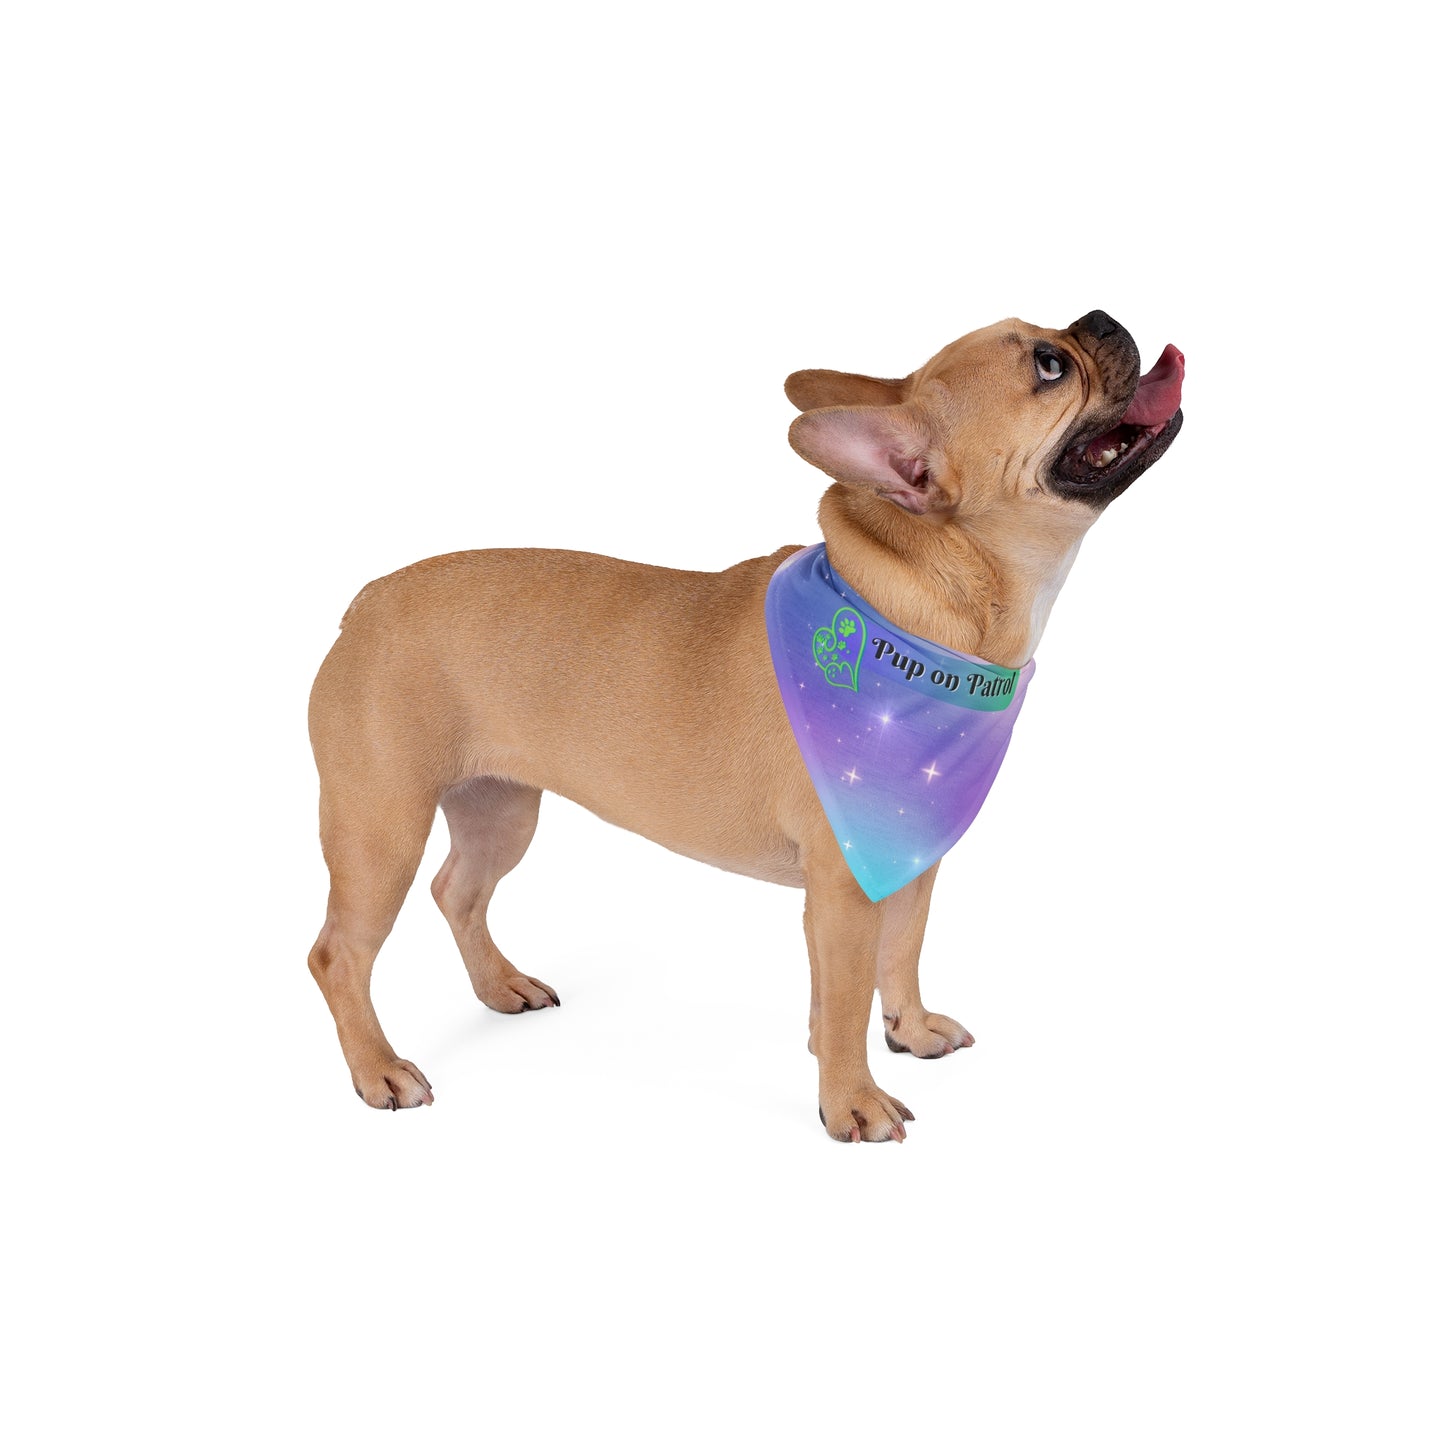 FurryFashionista Pet Bandana - "Pup on Patrol" Slogan, StarryPurple Design